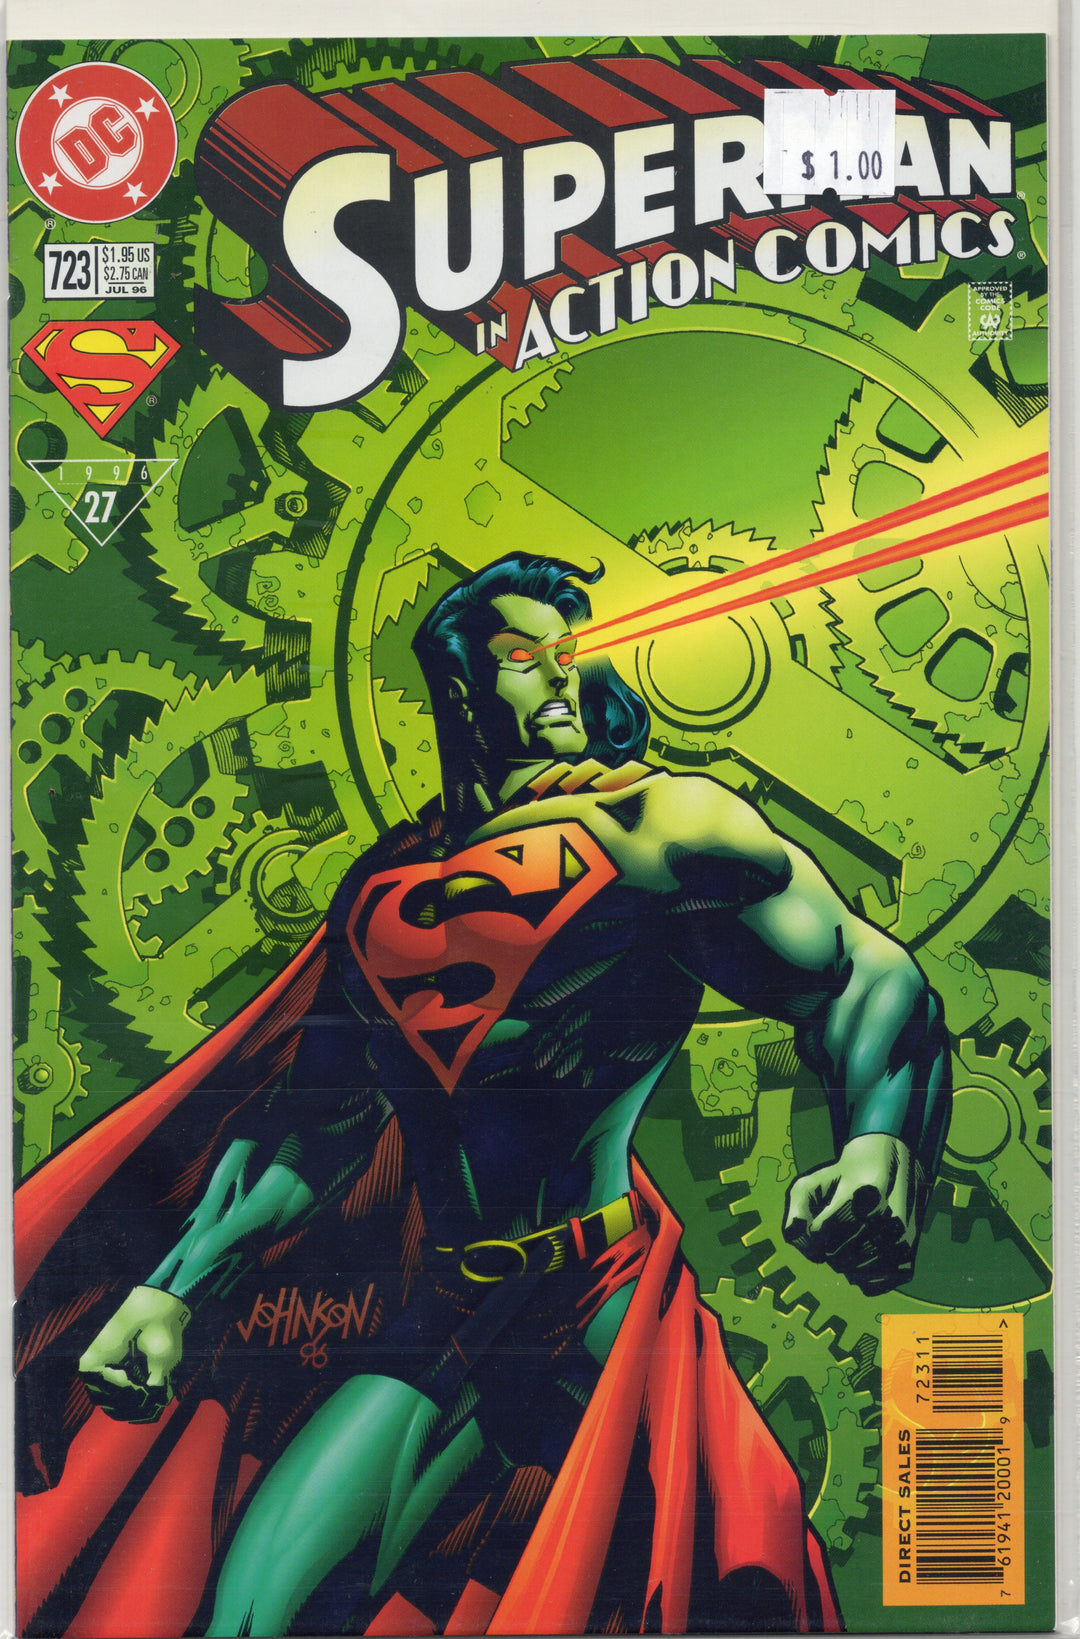 Superman Action Comics #723